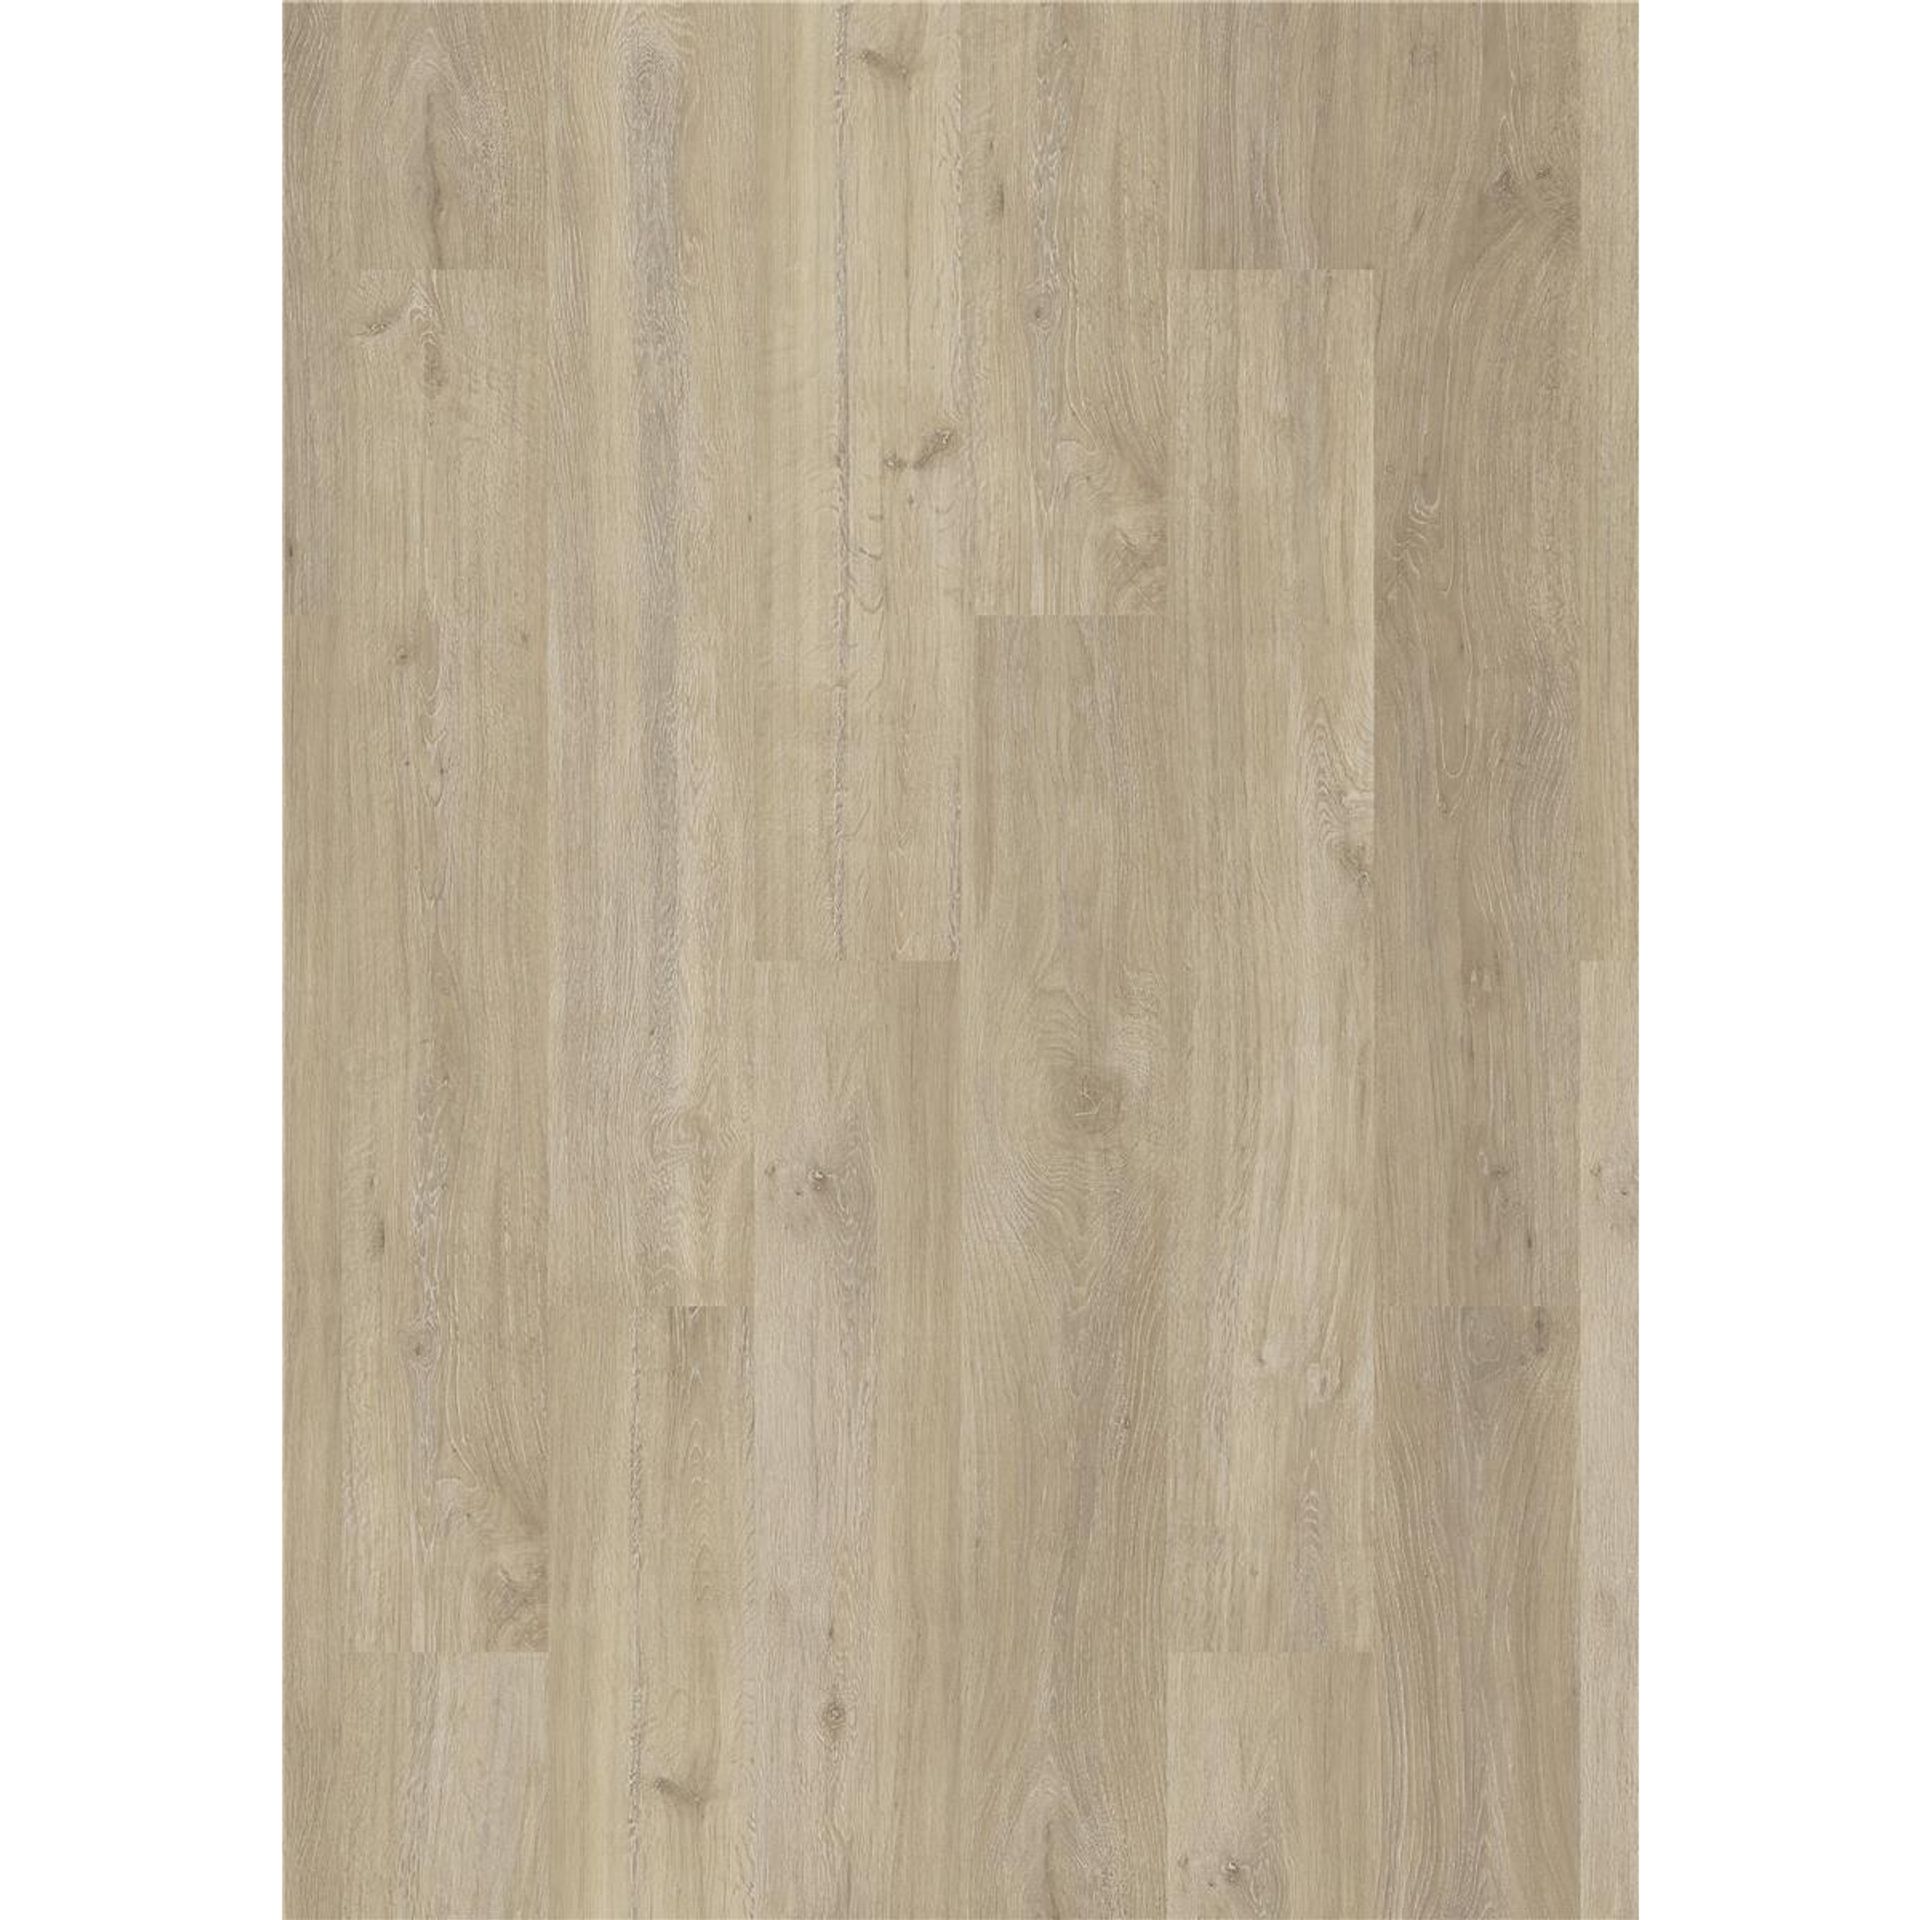 Laminat Planke 19,2 cm x 128,5 cm Klassik 1-Stab AS Oak cremeline - 7 mm Stärke